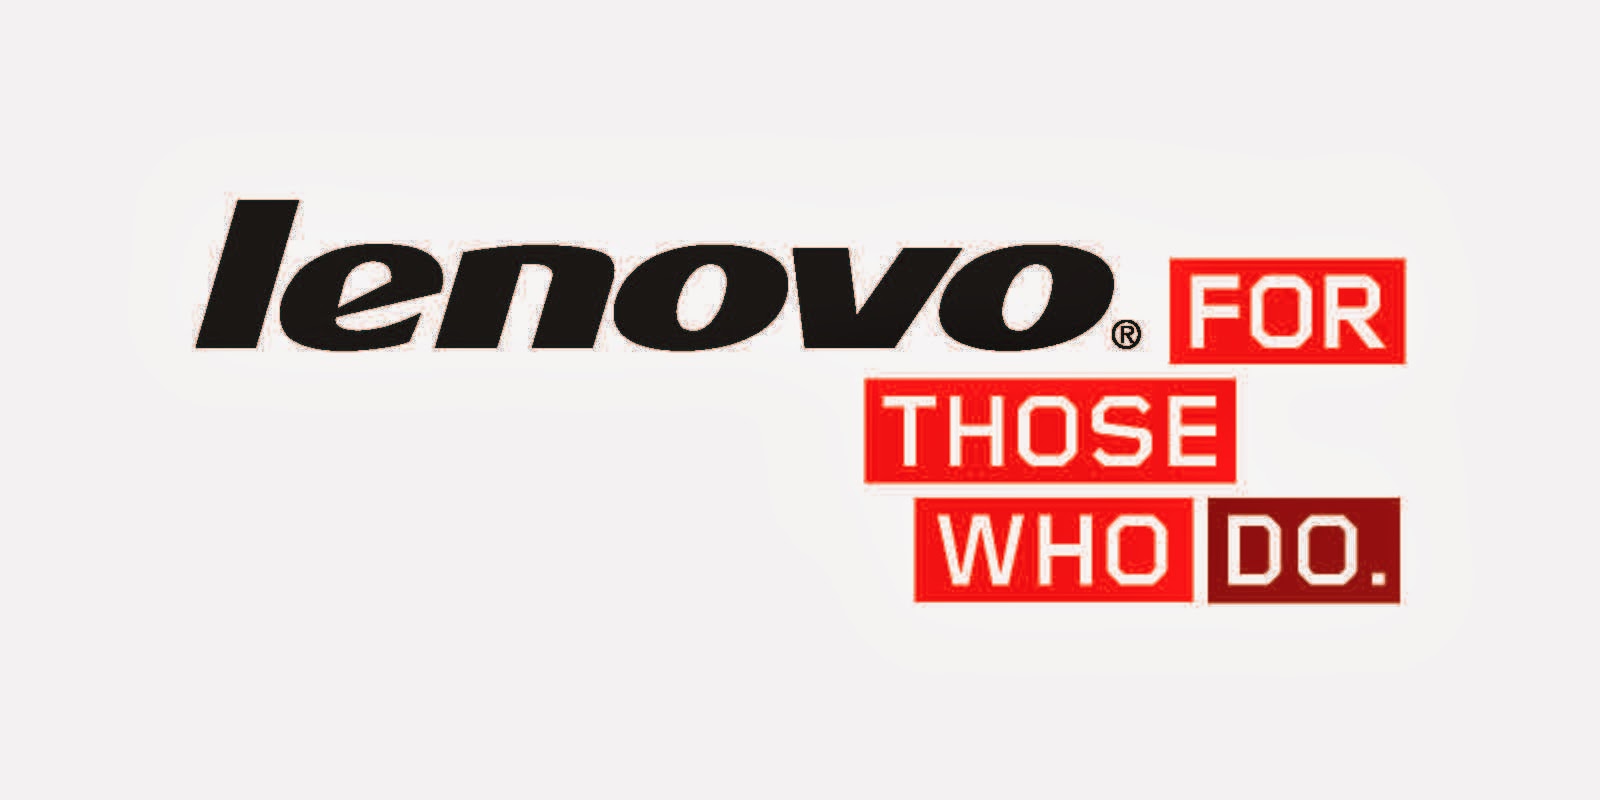 Daftar Harga Laptop Lenovo Terbaru 2015